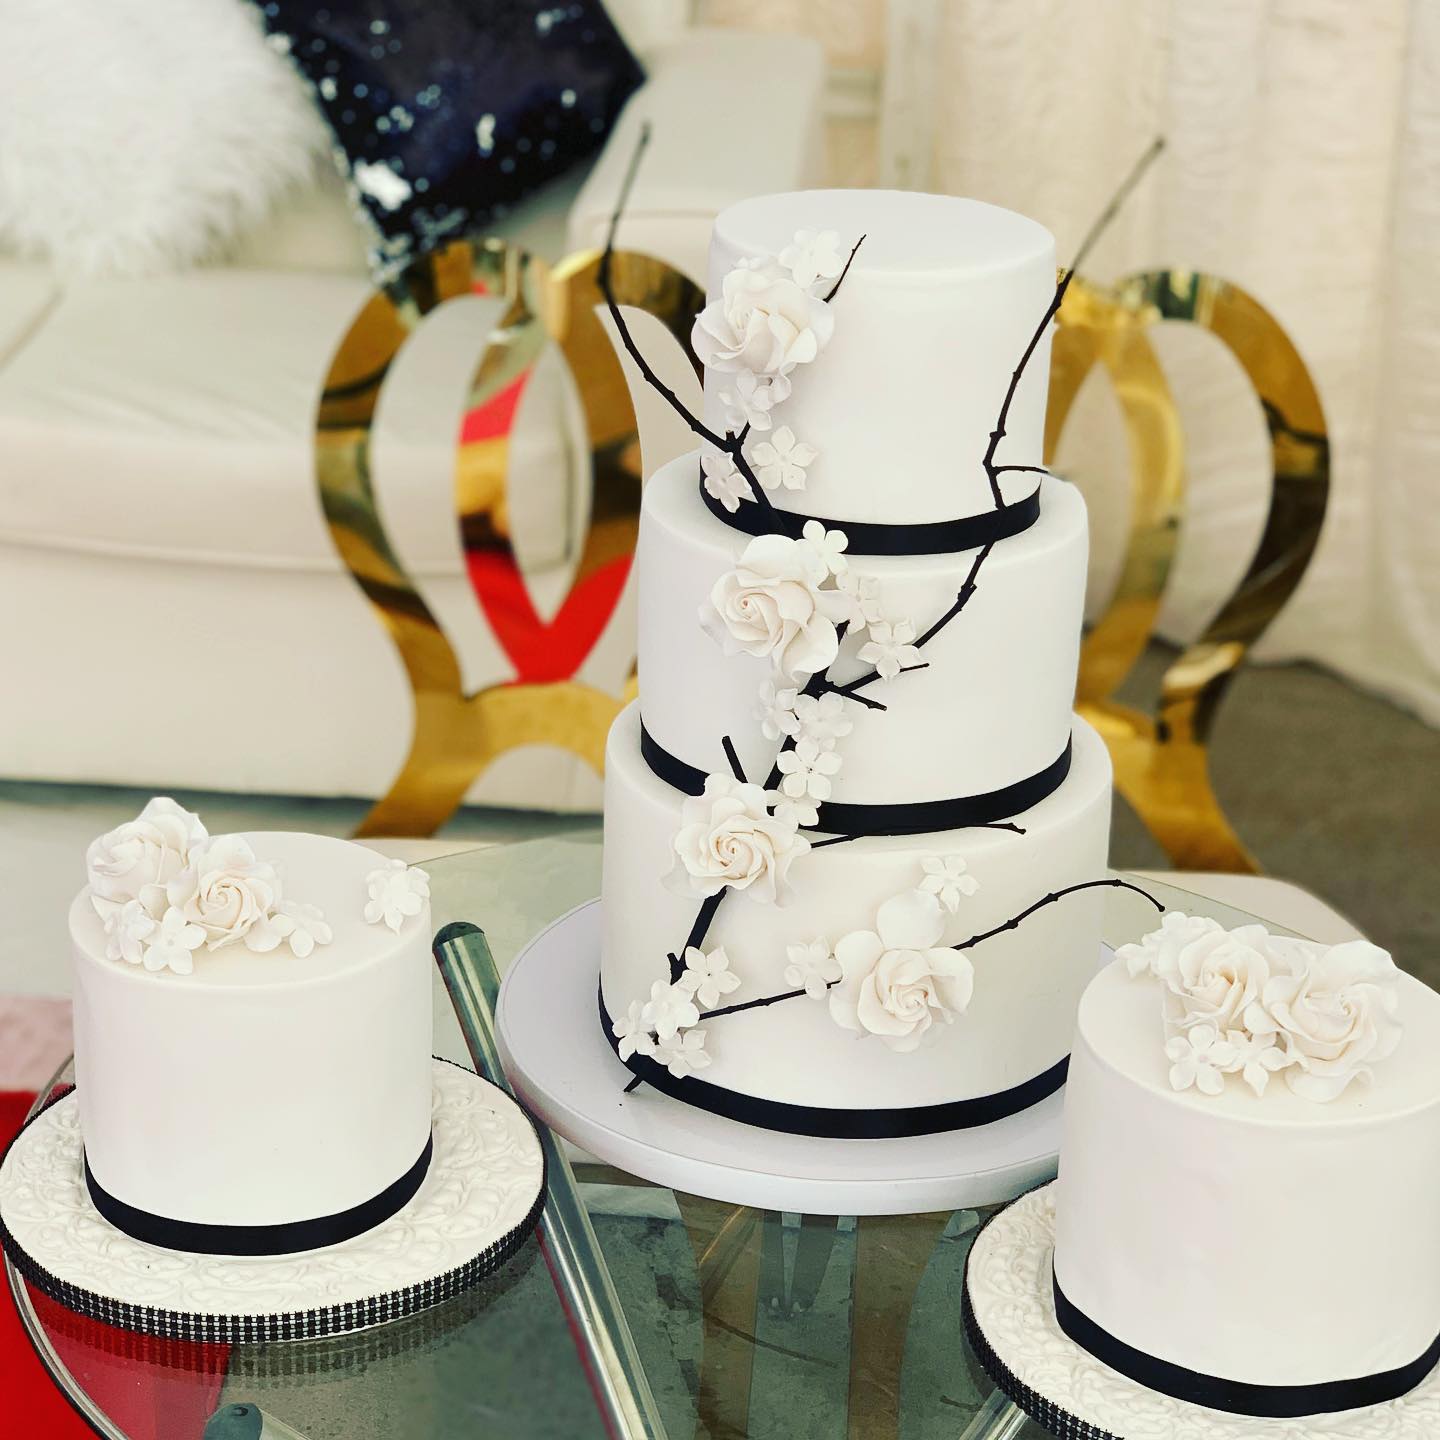 Andrea Black & White Wedding Cake - Rashmi's Bakery